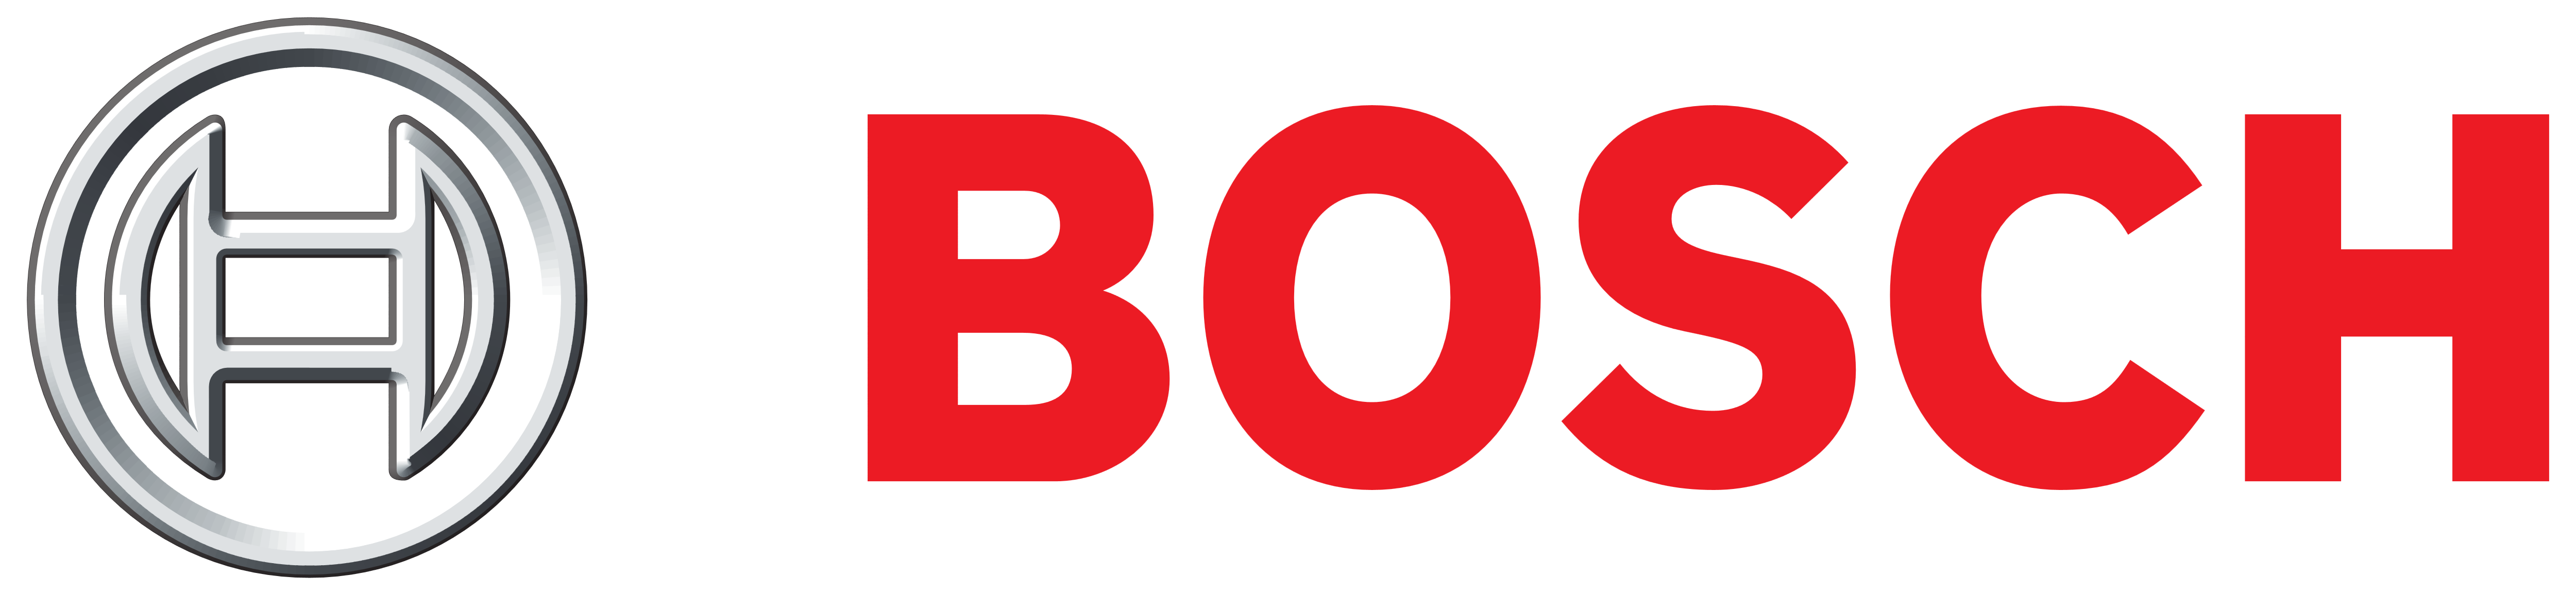 Bosch – Logos Download